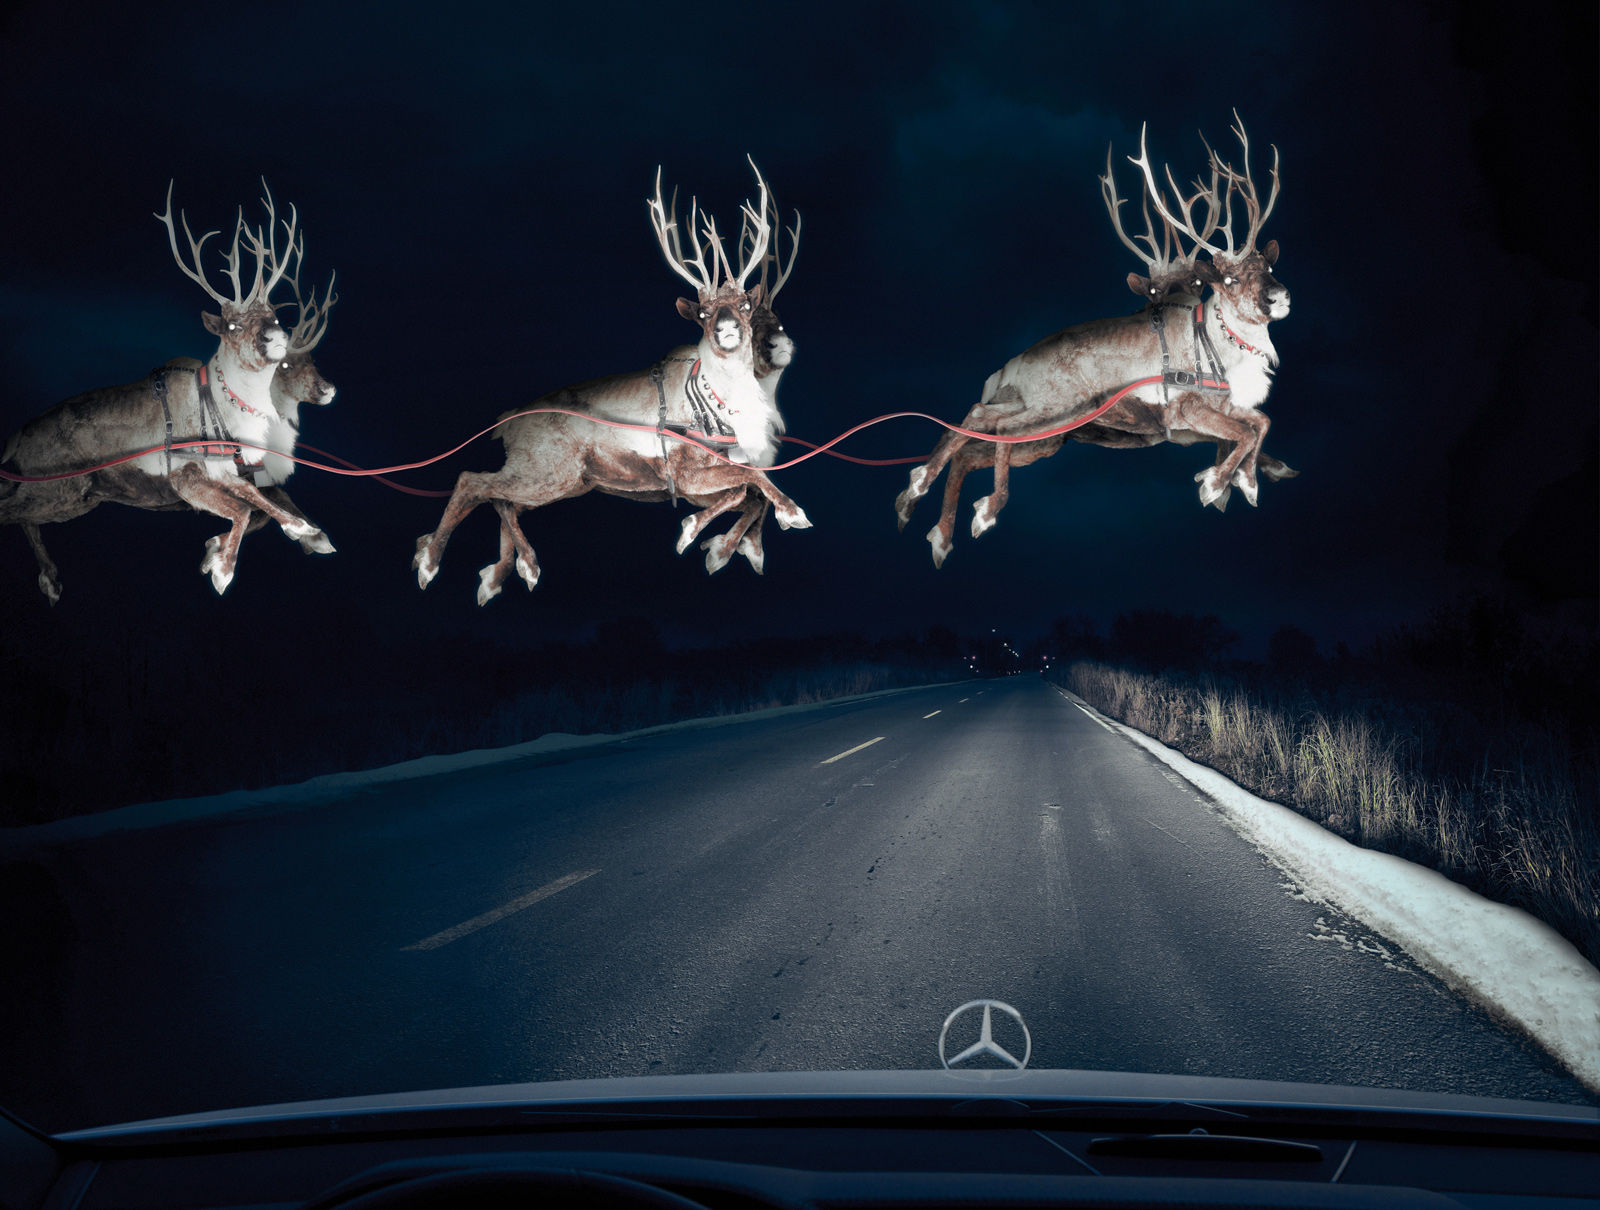 mercedes_reindeer_in_headlights-1.jpeg